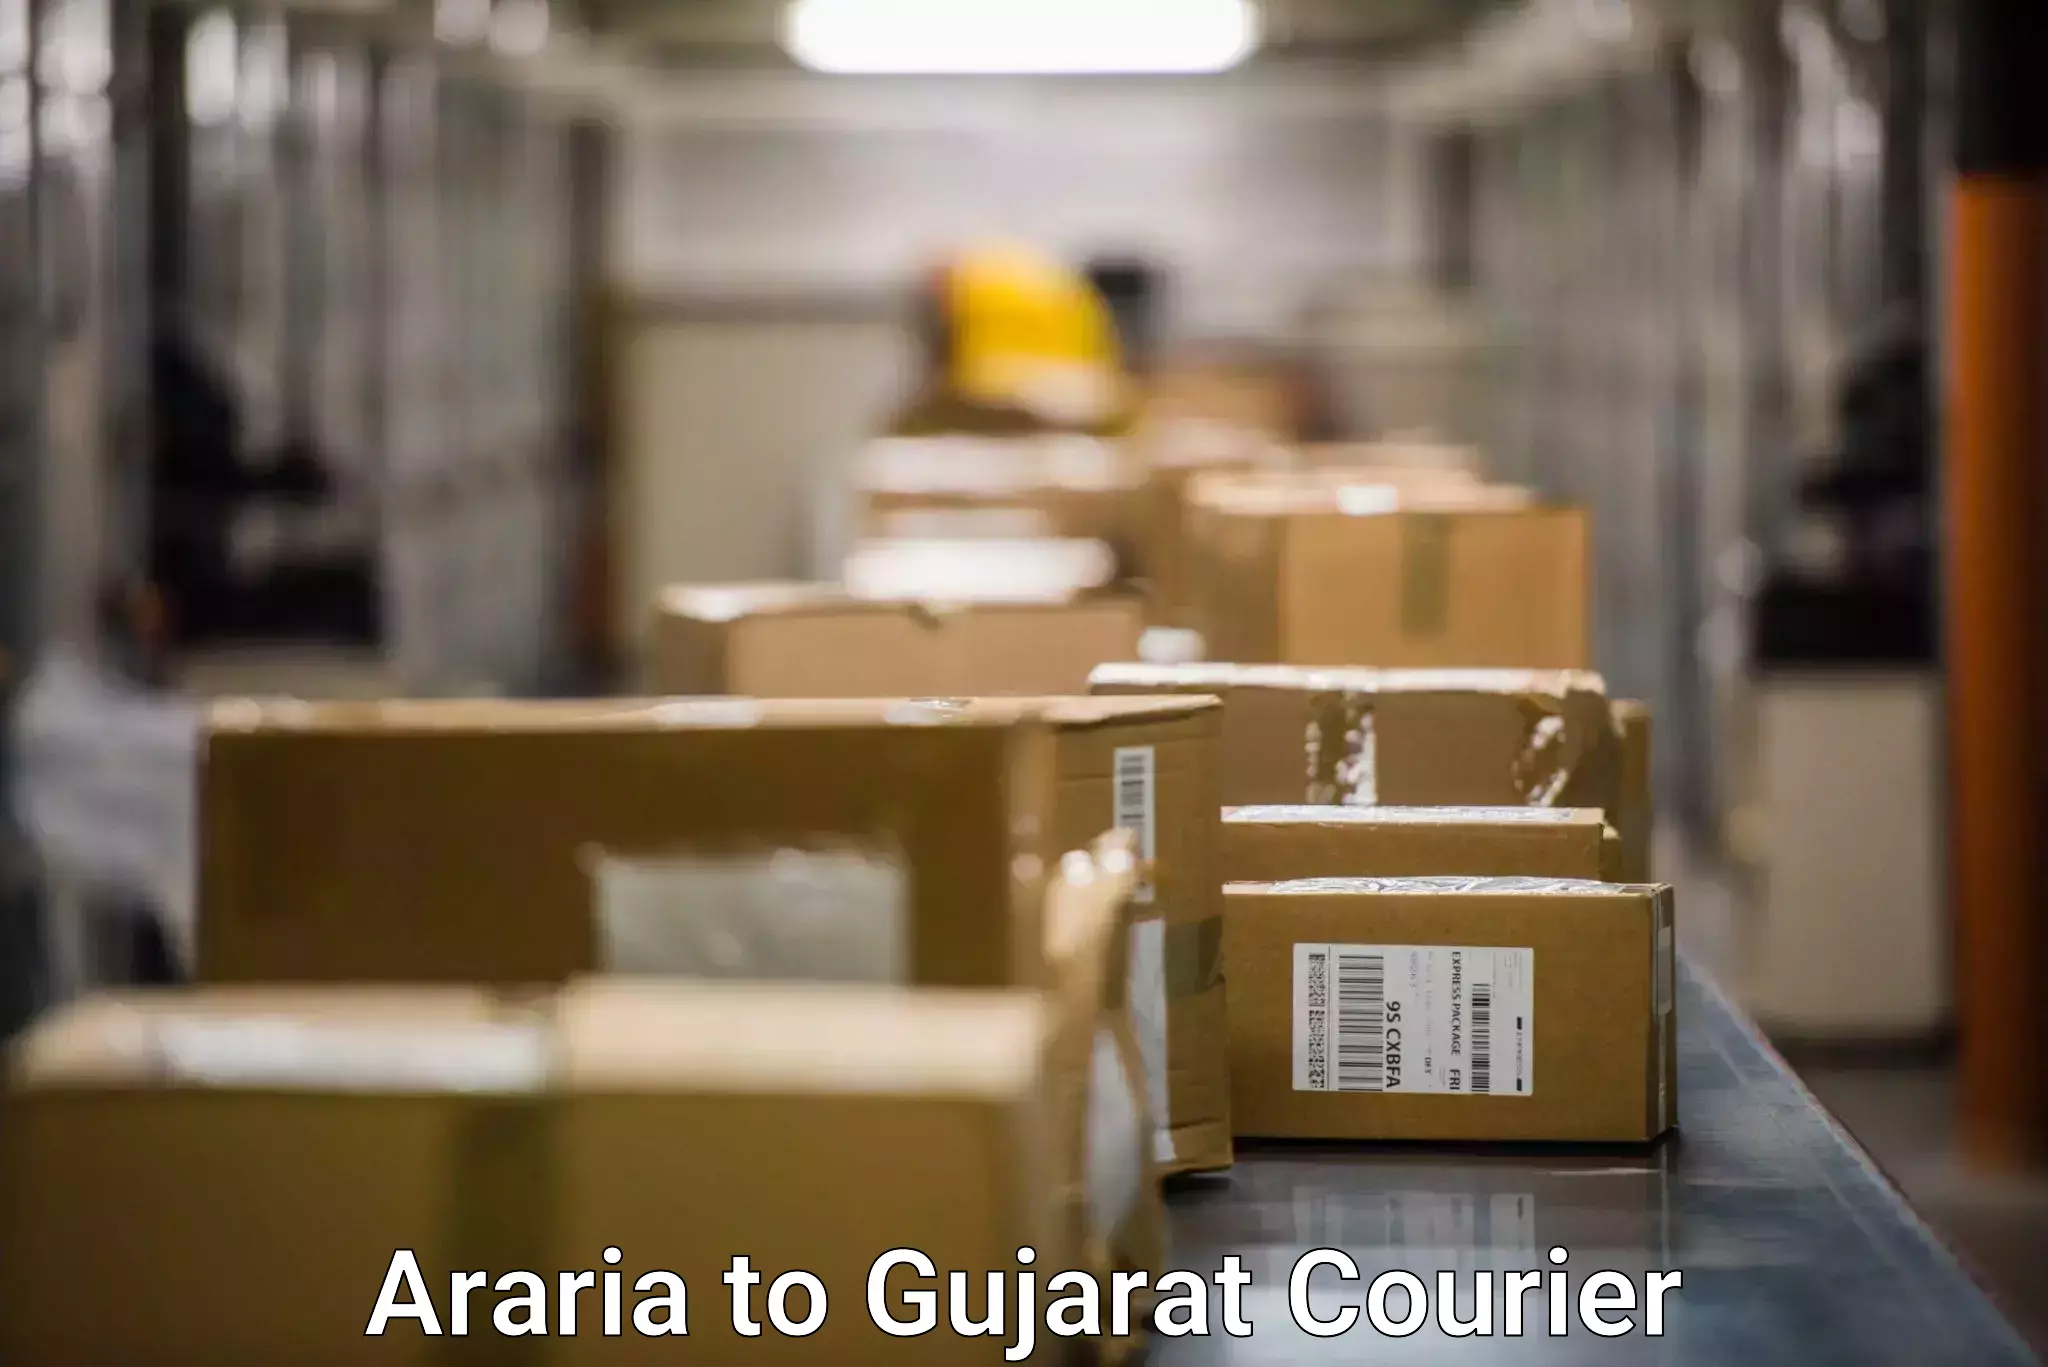 Global courier networks Araria to Kandla Port